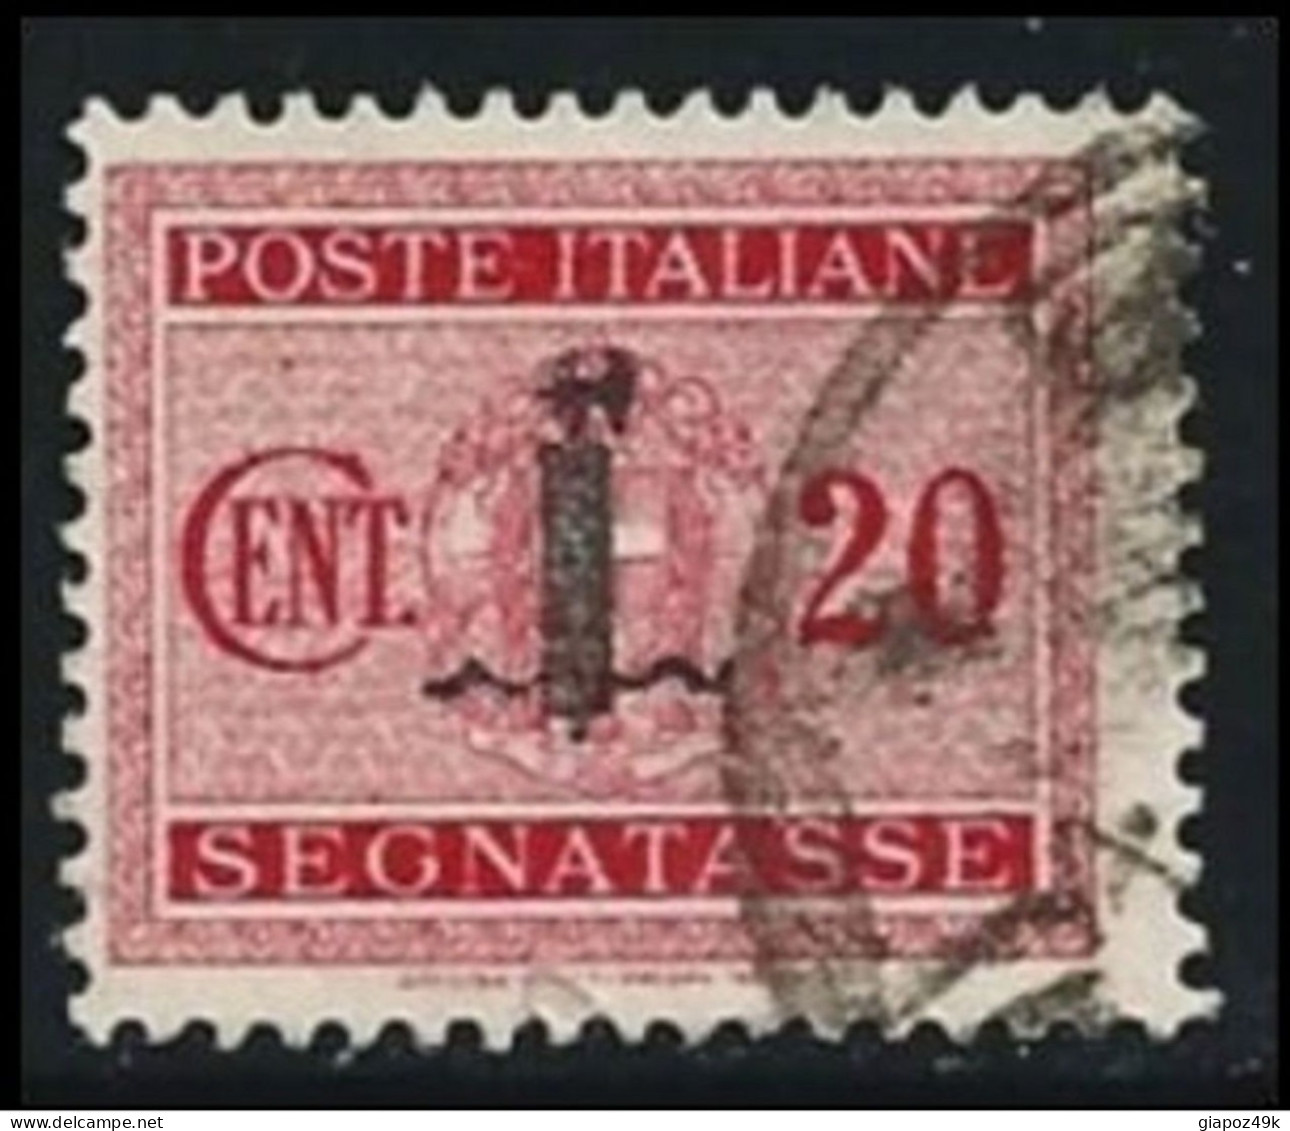 ● ITALIA - R.S.I. 1944 ֍ SEGNATASSE ● N.° 62 Usato ● Fil. S ● Cat. ? € ️● Lotto N. 950 ● - Taxe